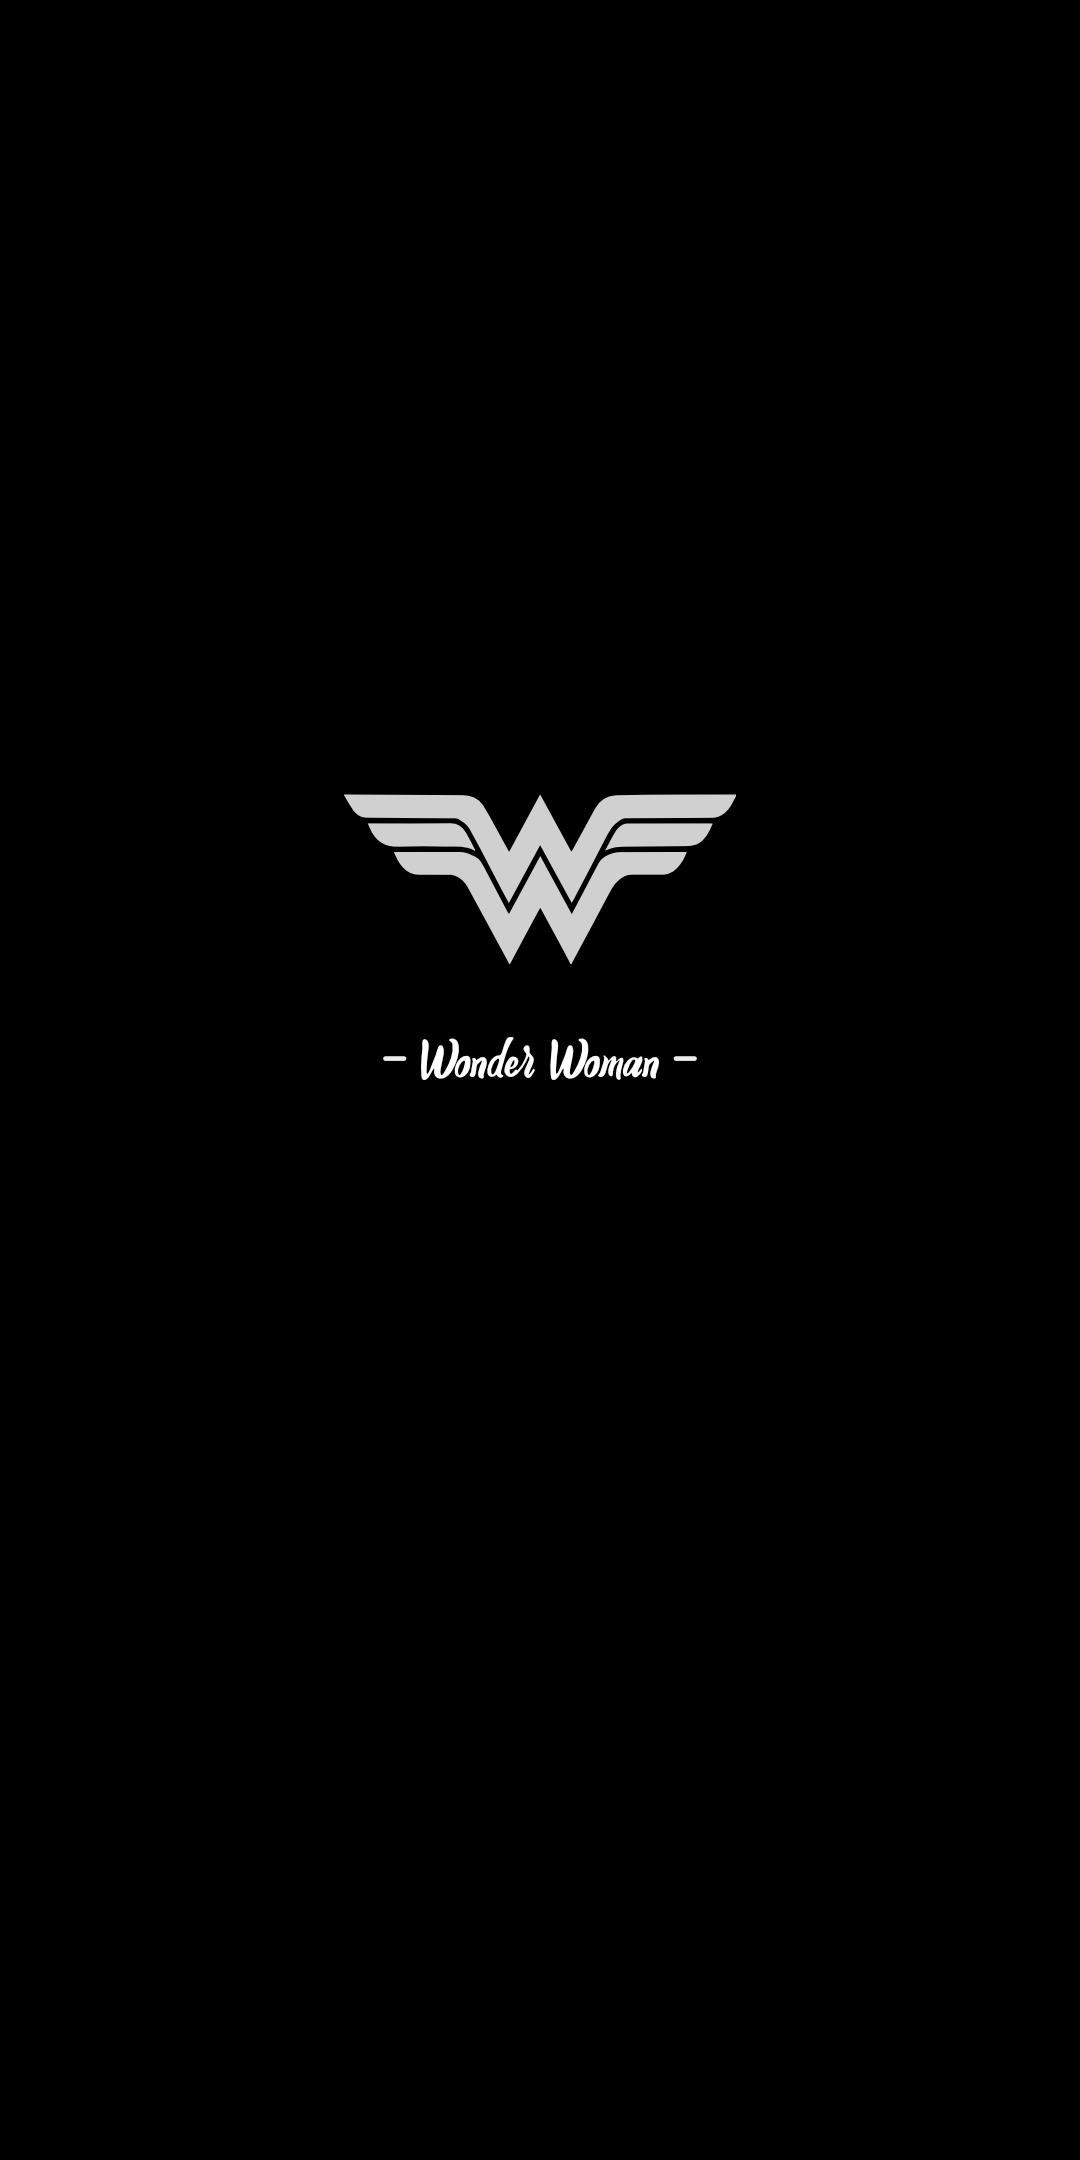 Artwork] I made a minimalist Wonder Woman wallpaper for oled